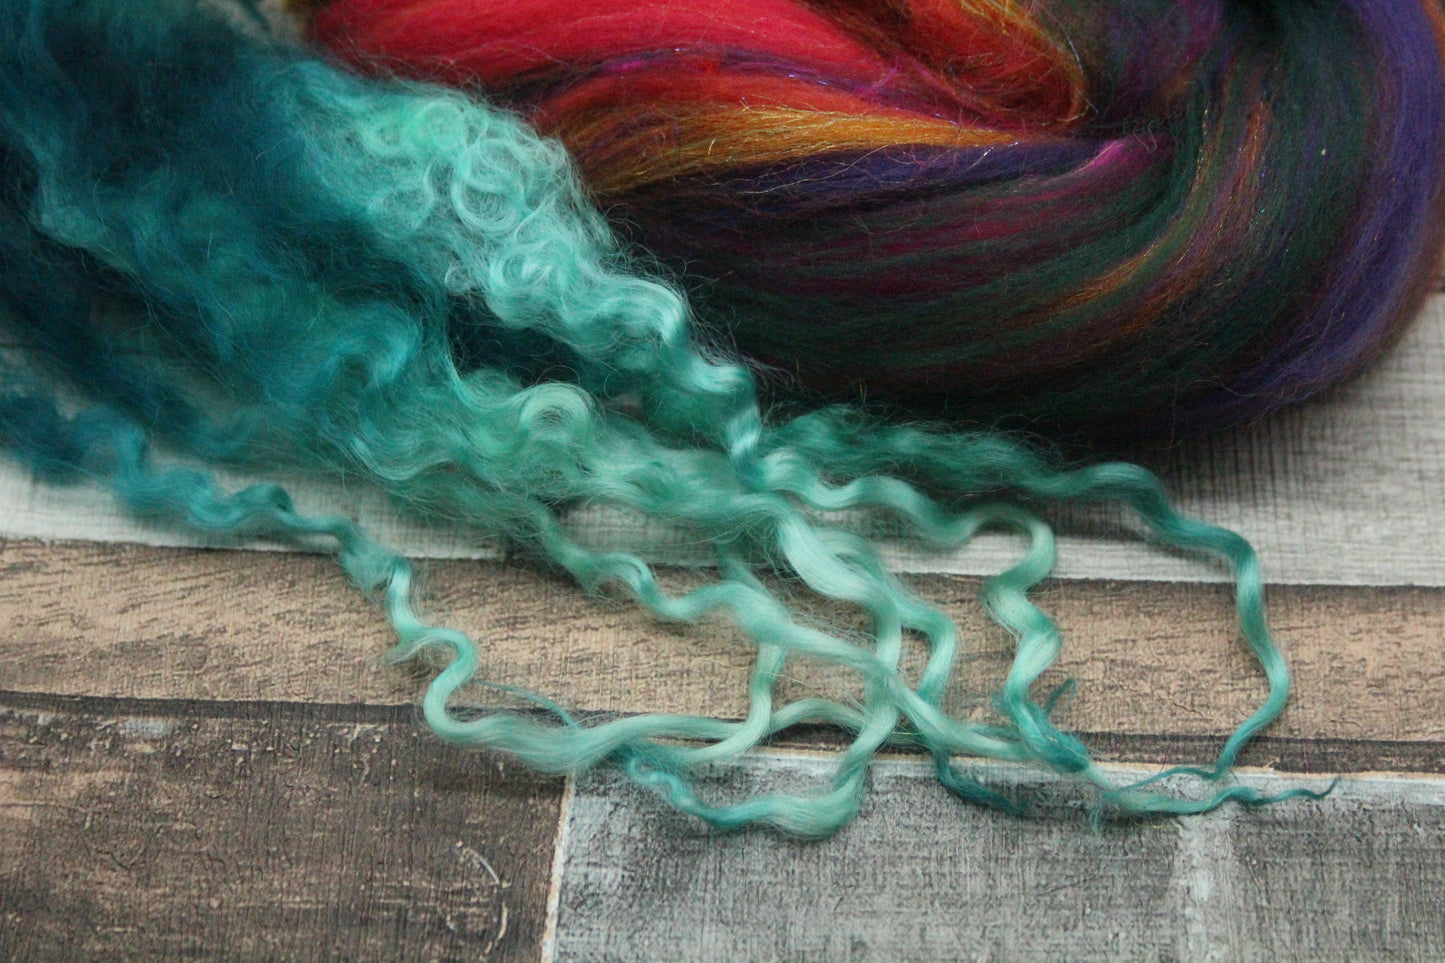 Merino Wool Blend - Green Orange Pink - 16 grams / 0.5 oz  - Fibre for felting, weaving or spinning